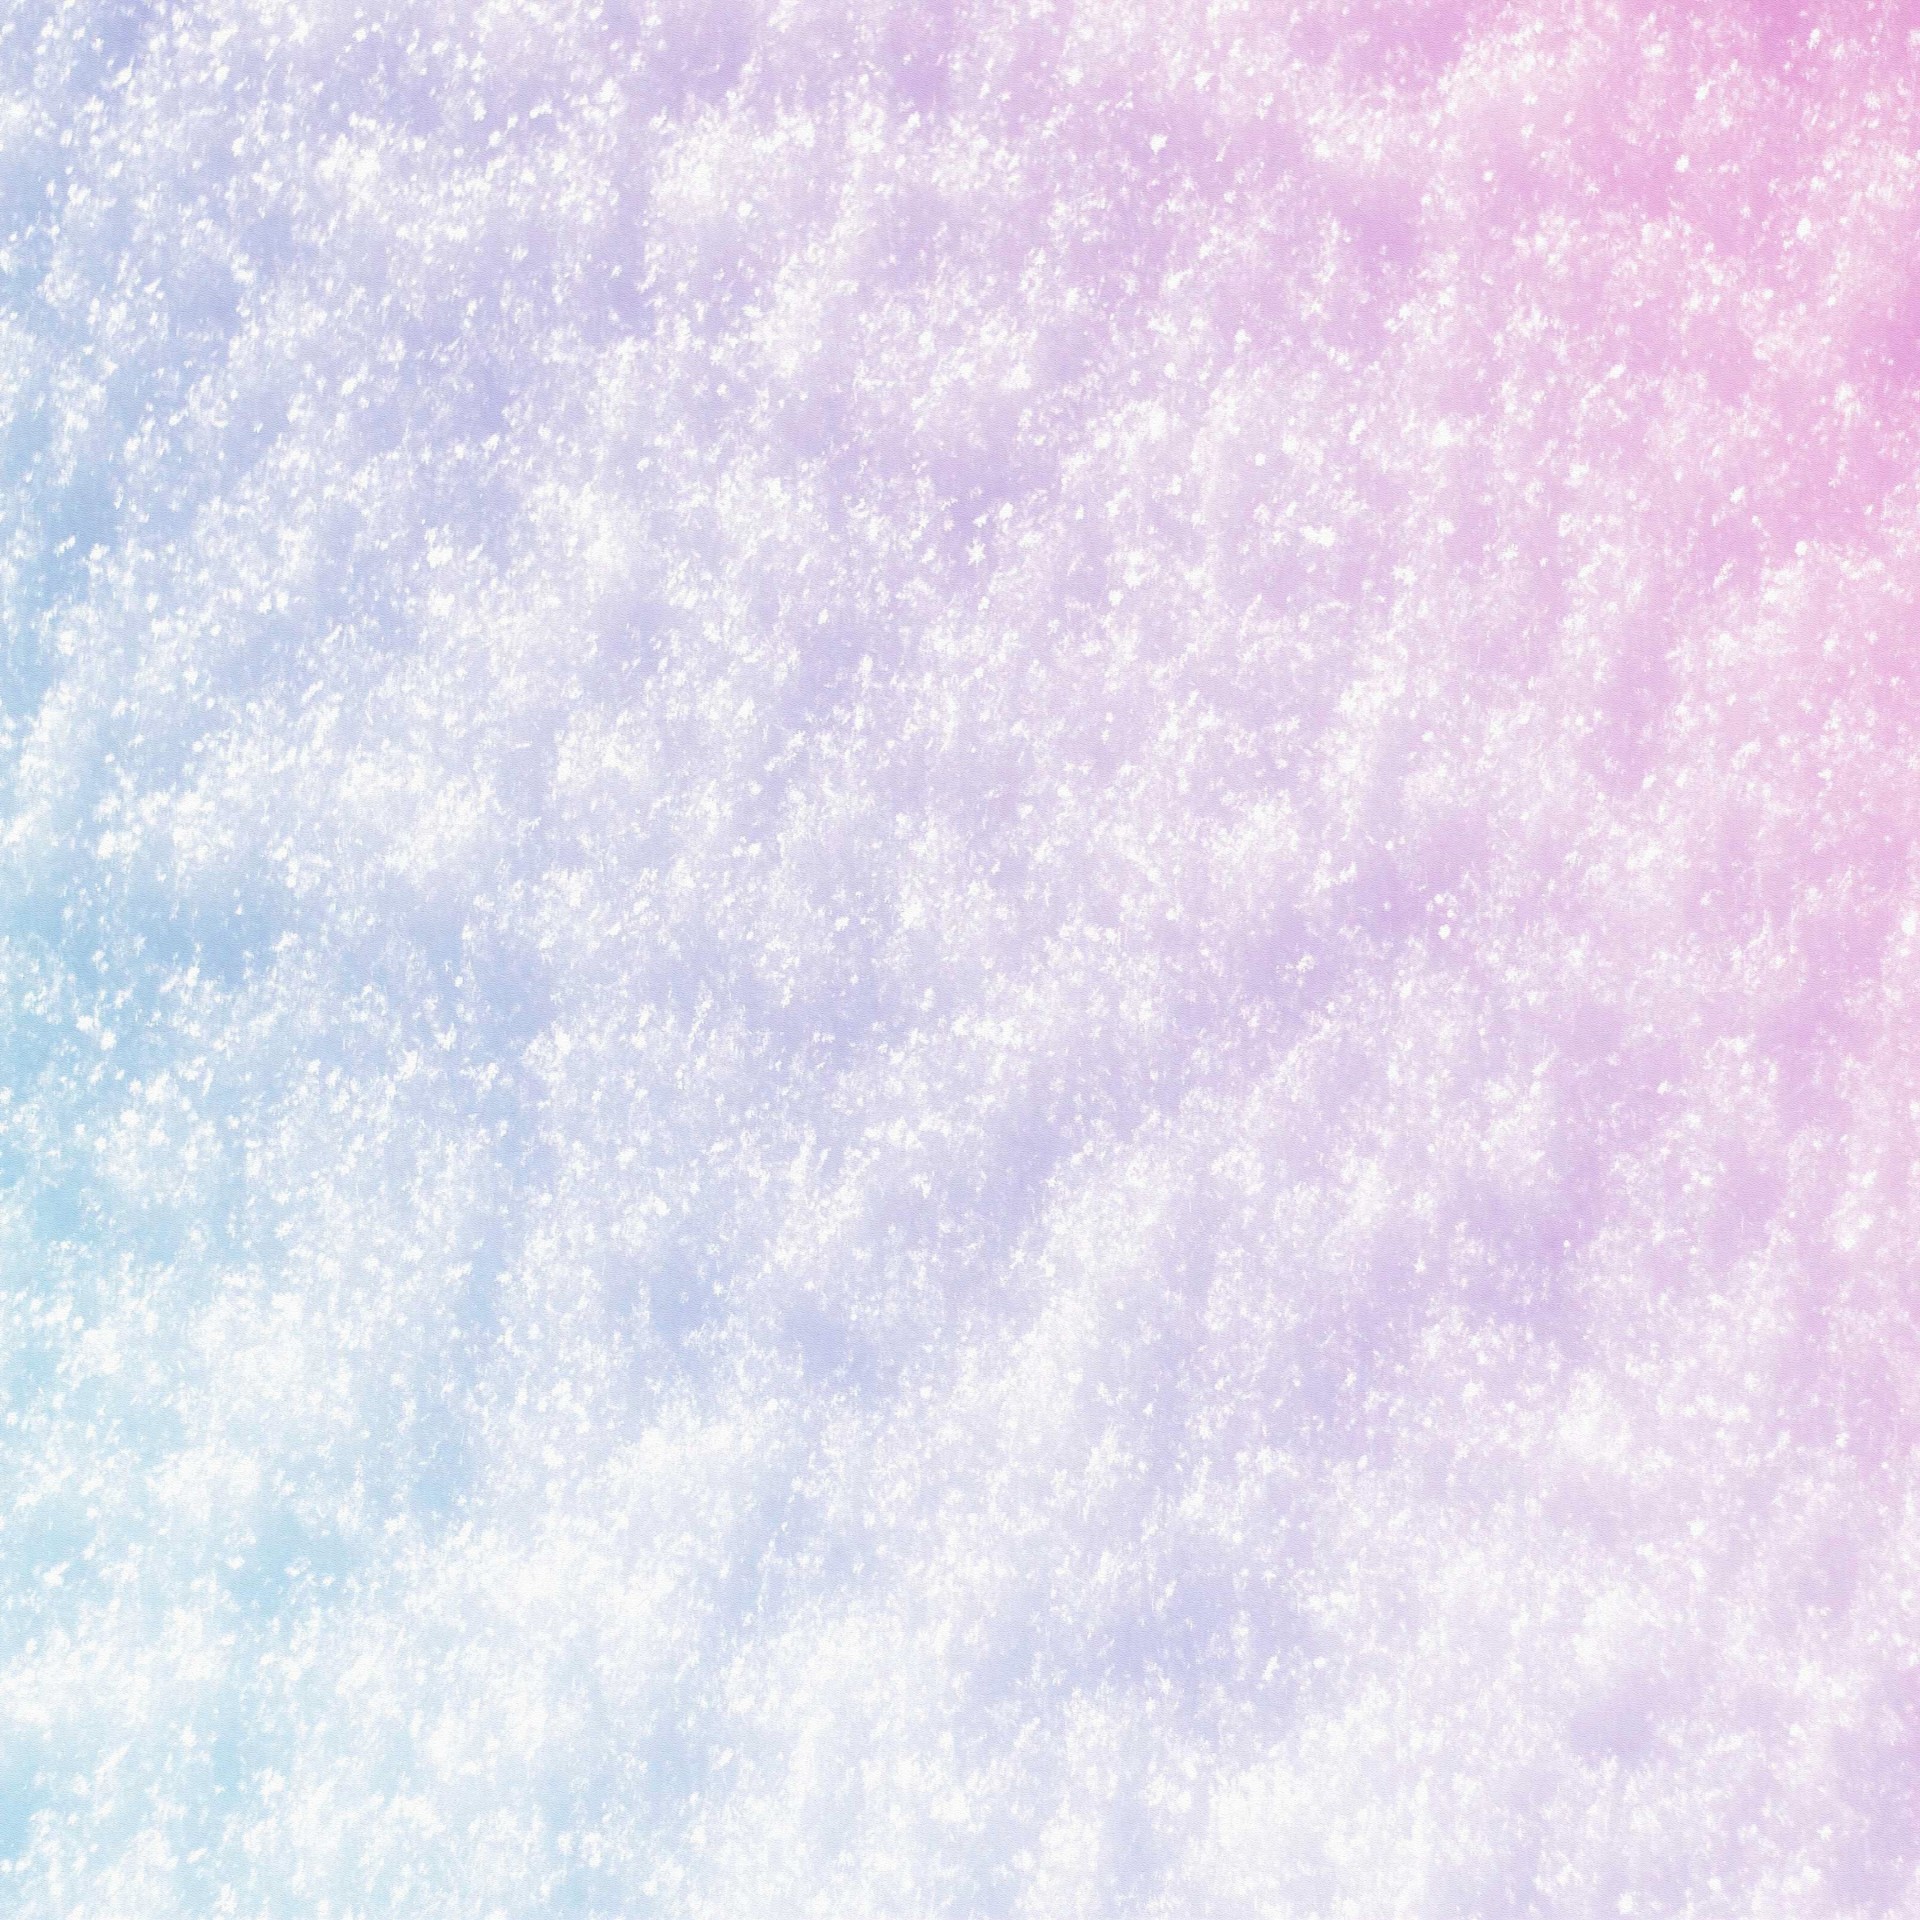 winter snow background design snow pastel # 1 free photo